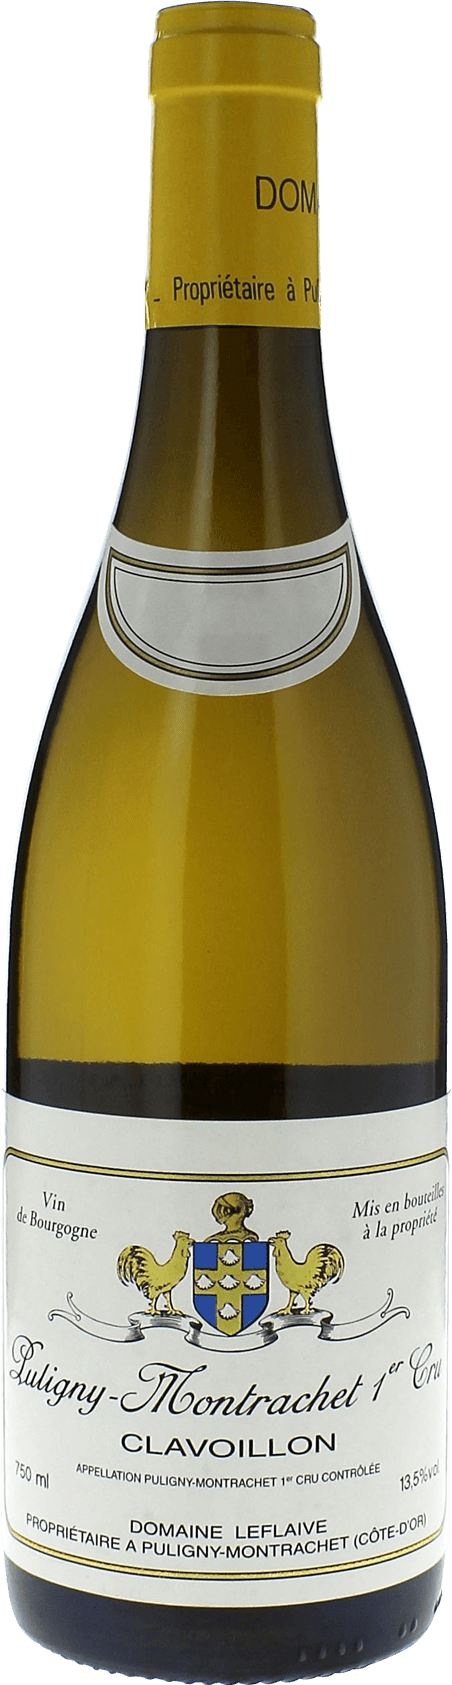 Puligny montrachet 1er cru  clavoillon 2015 Domaine LEFLAIVE, Bourgogne blanc